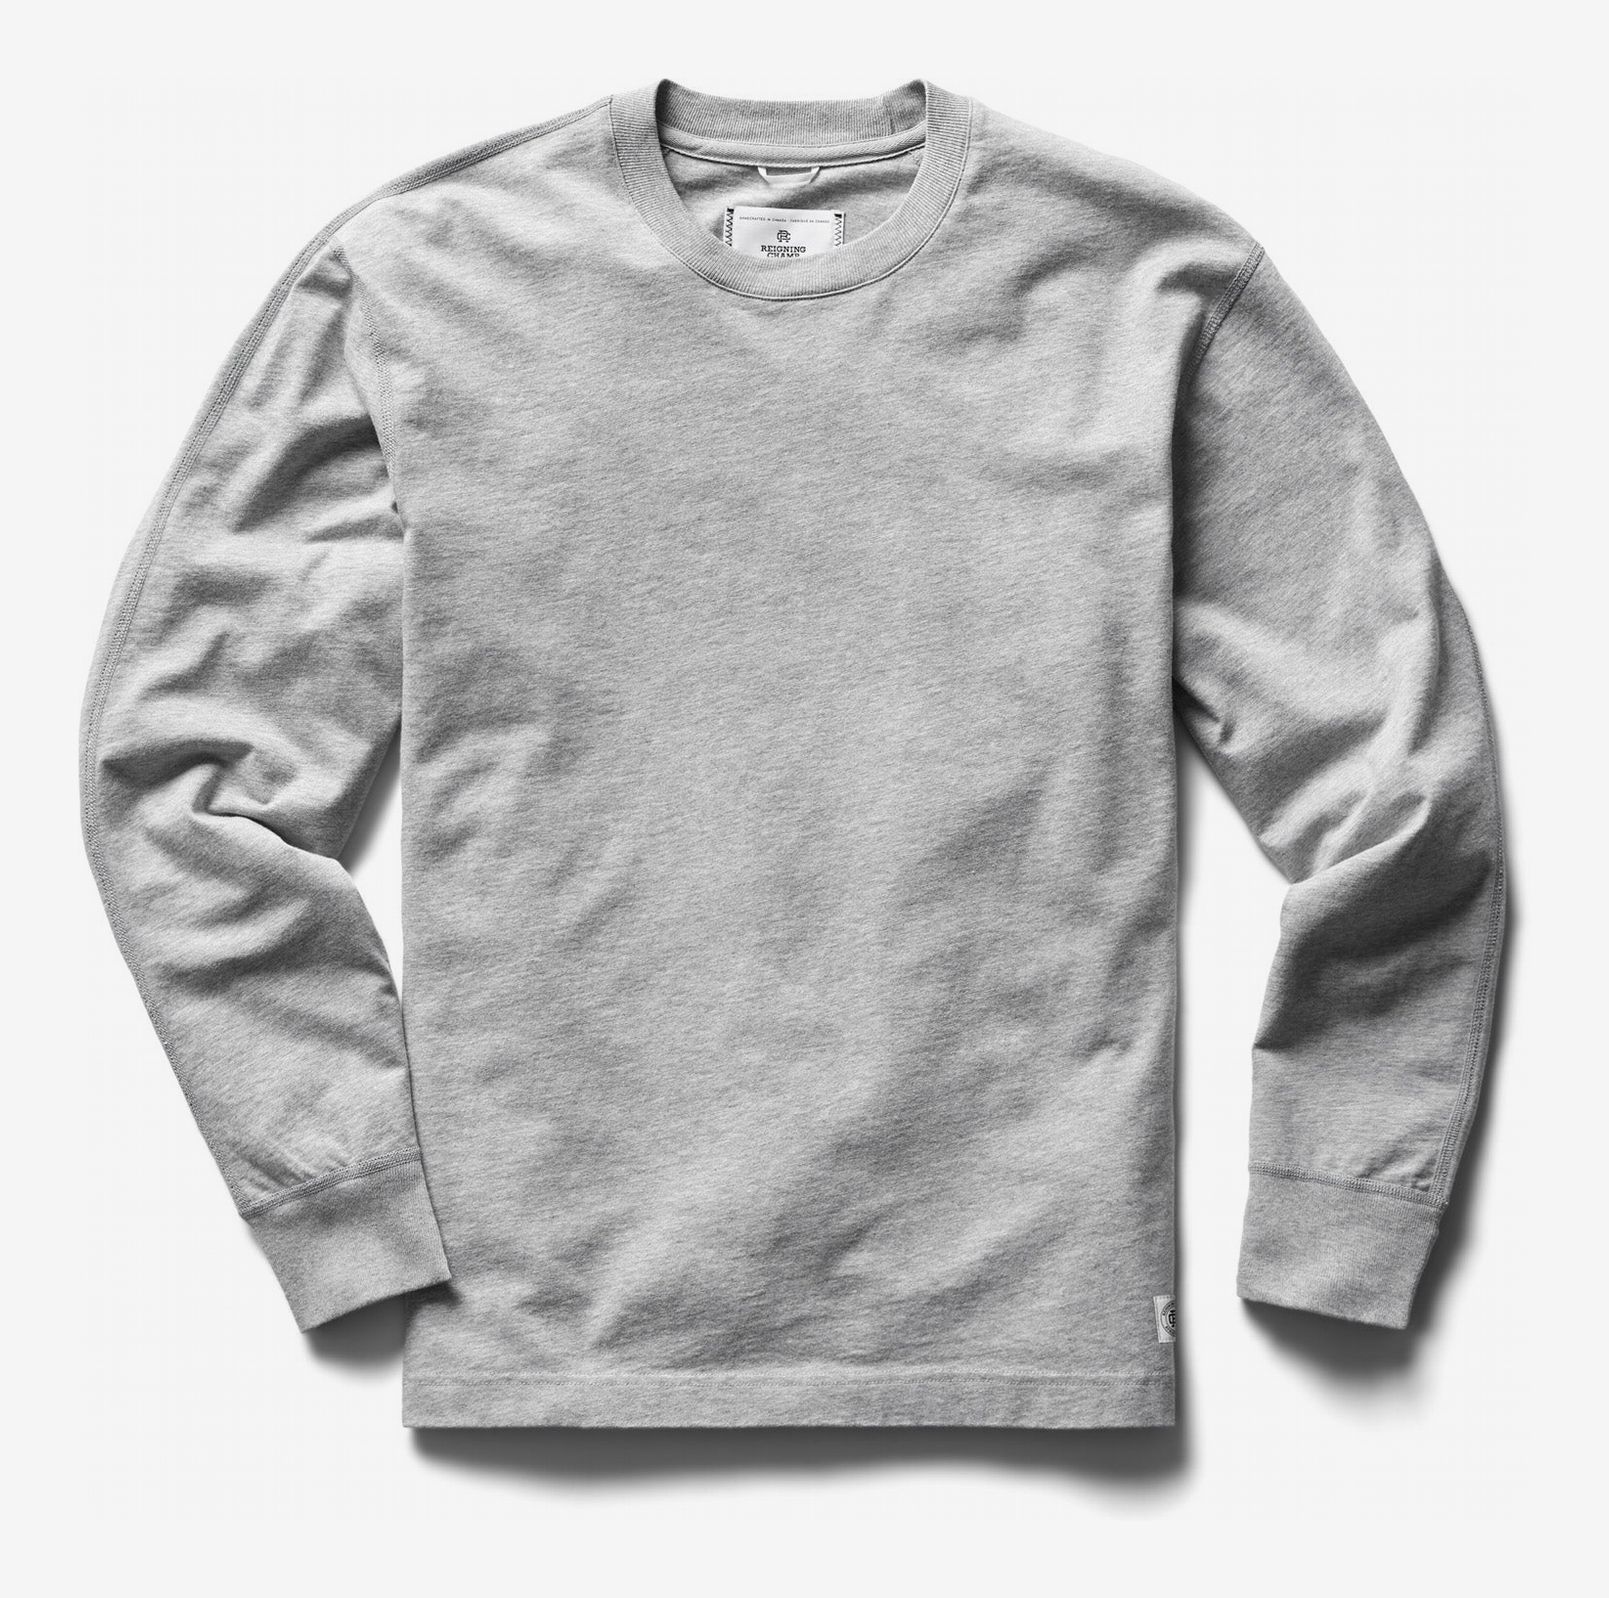 Cotton Longesleeve geruite print casual uitstraling Mode Shirts Longsleeves 